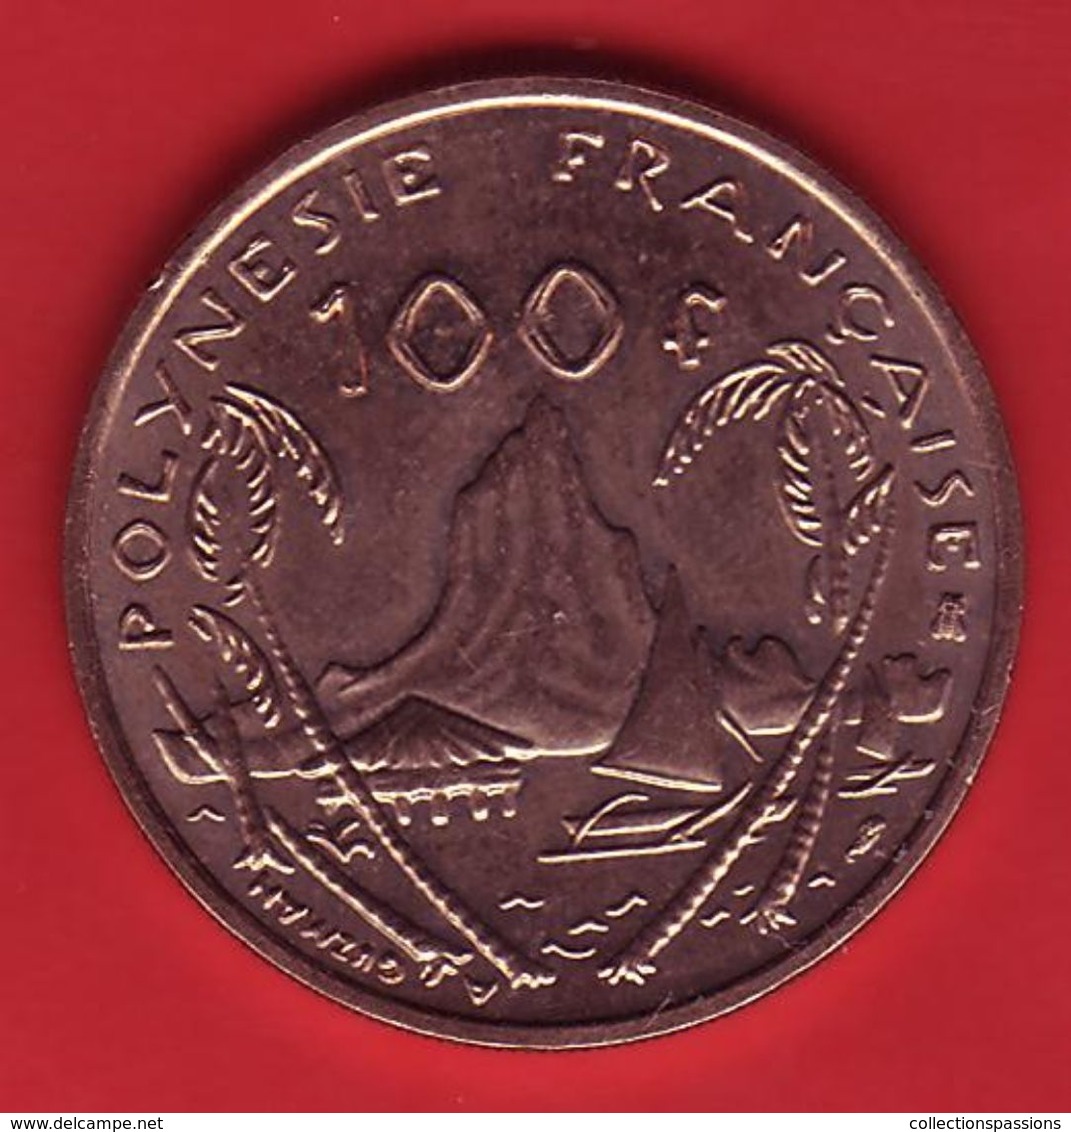 - POLYNESIE FRANCAISE - 100 Francs - 1995 - - Französisch-Polynesien